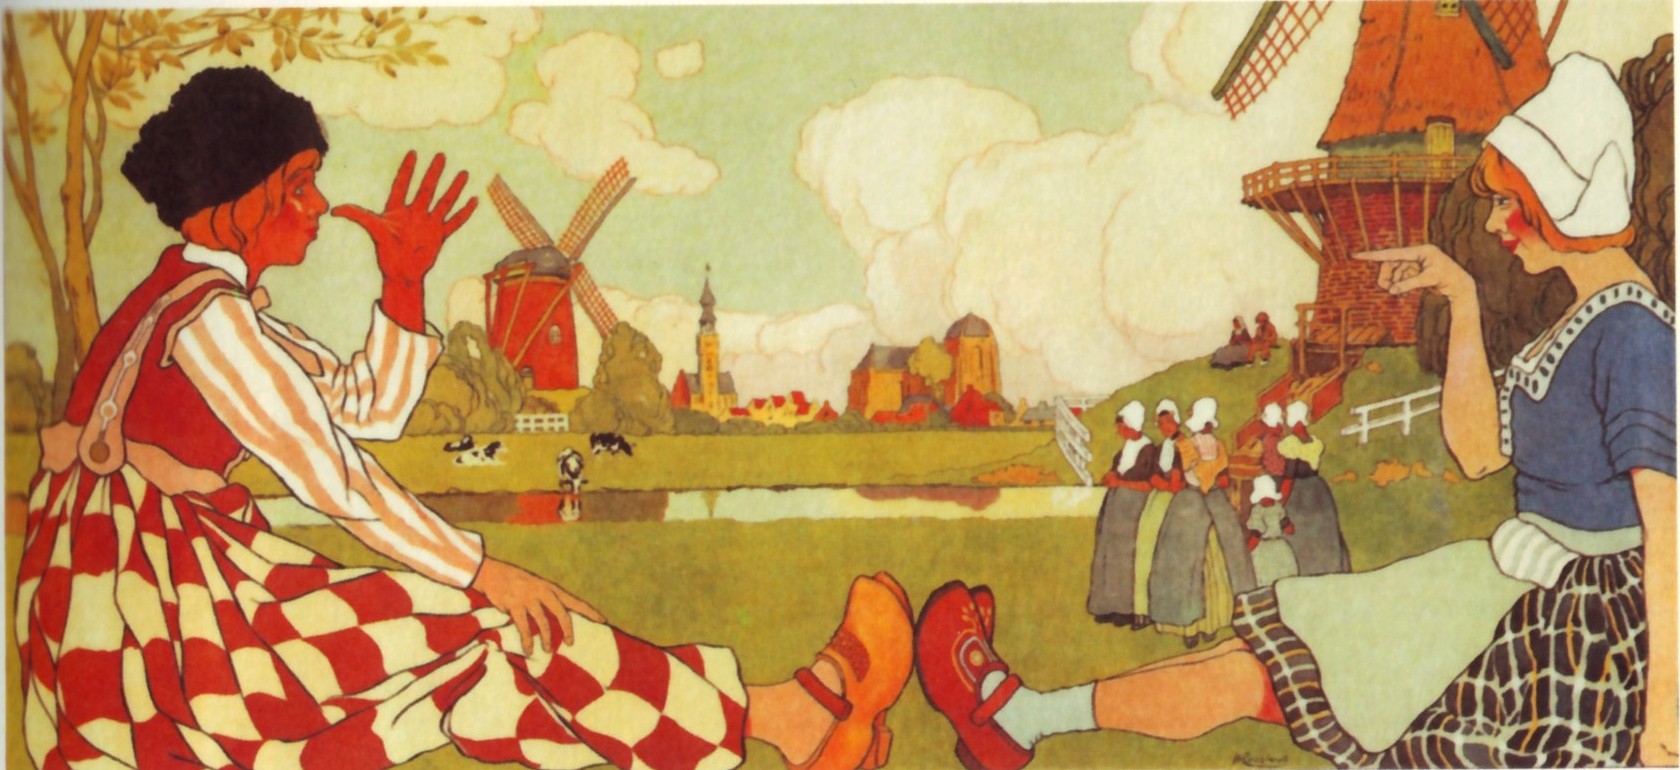 Henri Cassier's poster for the singing windmills operetta.